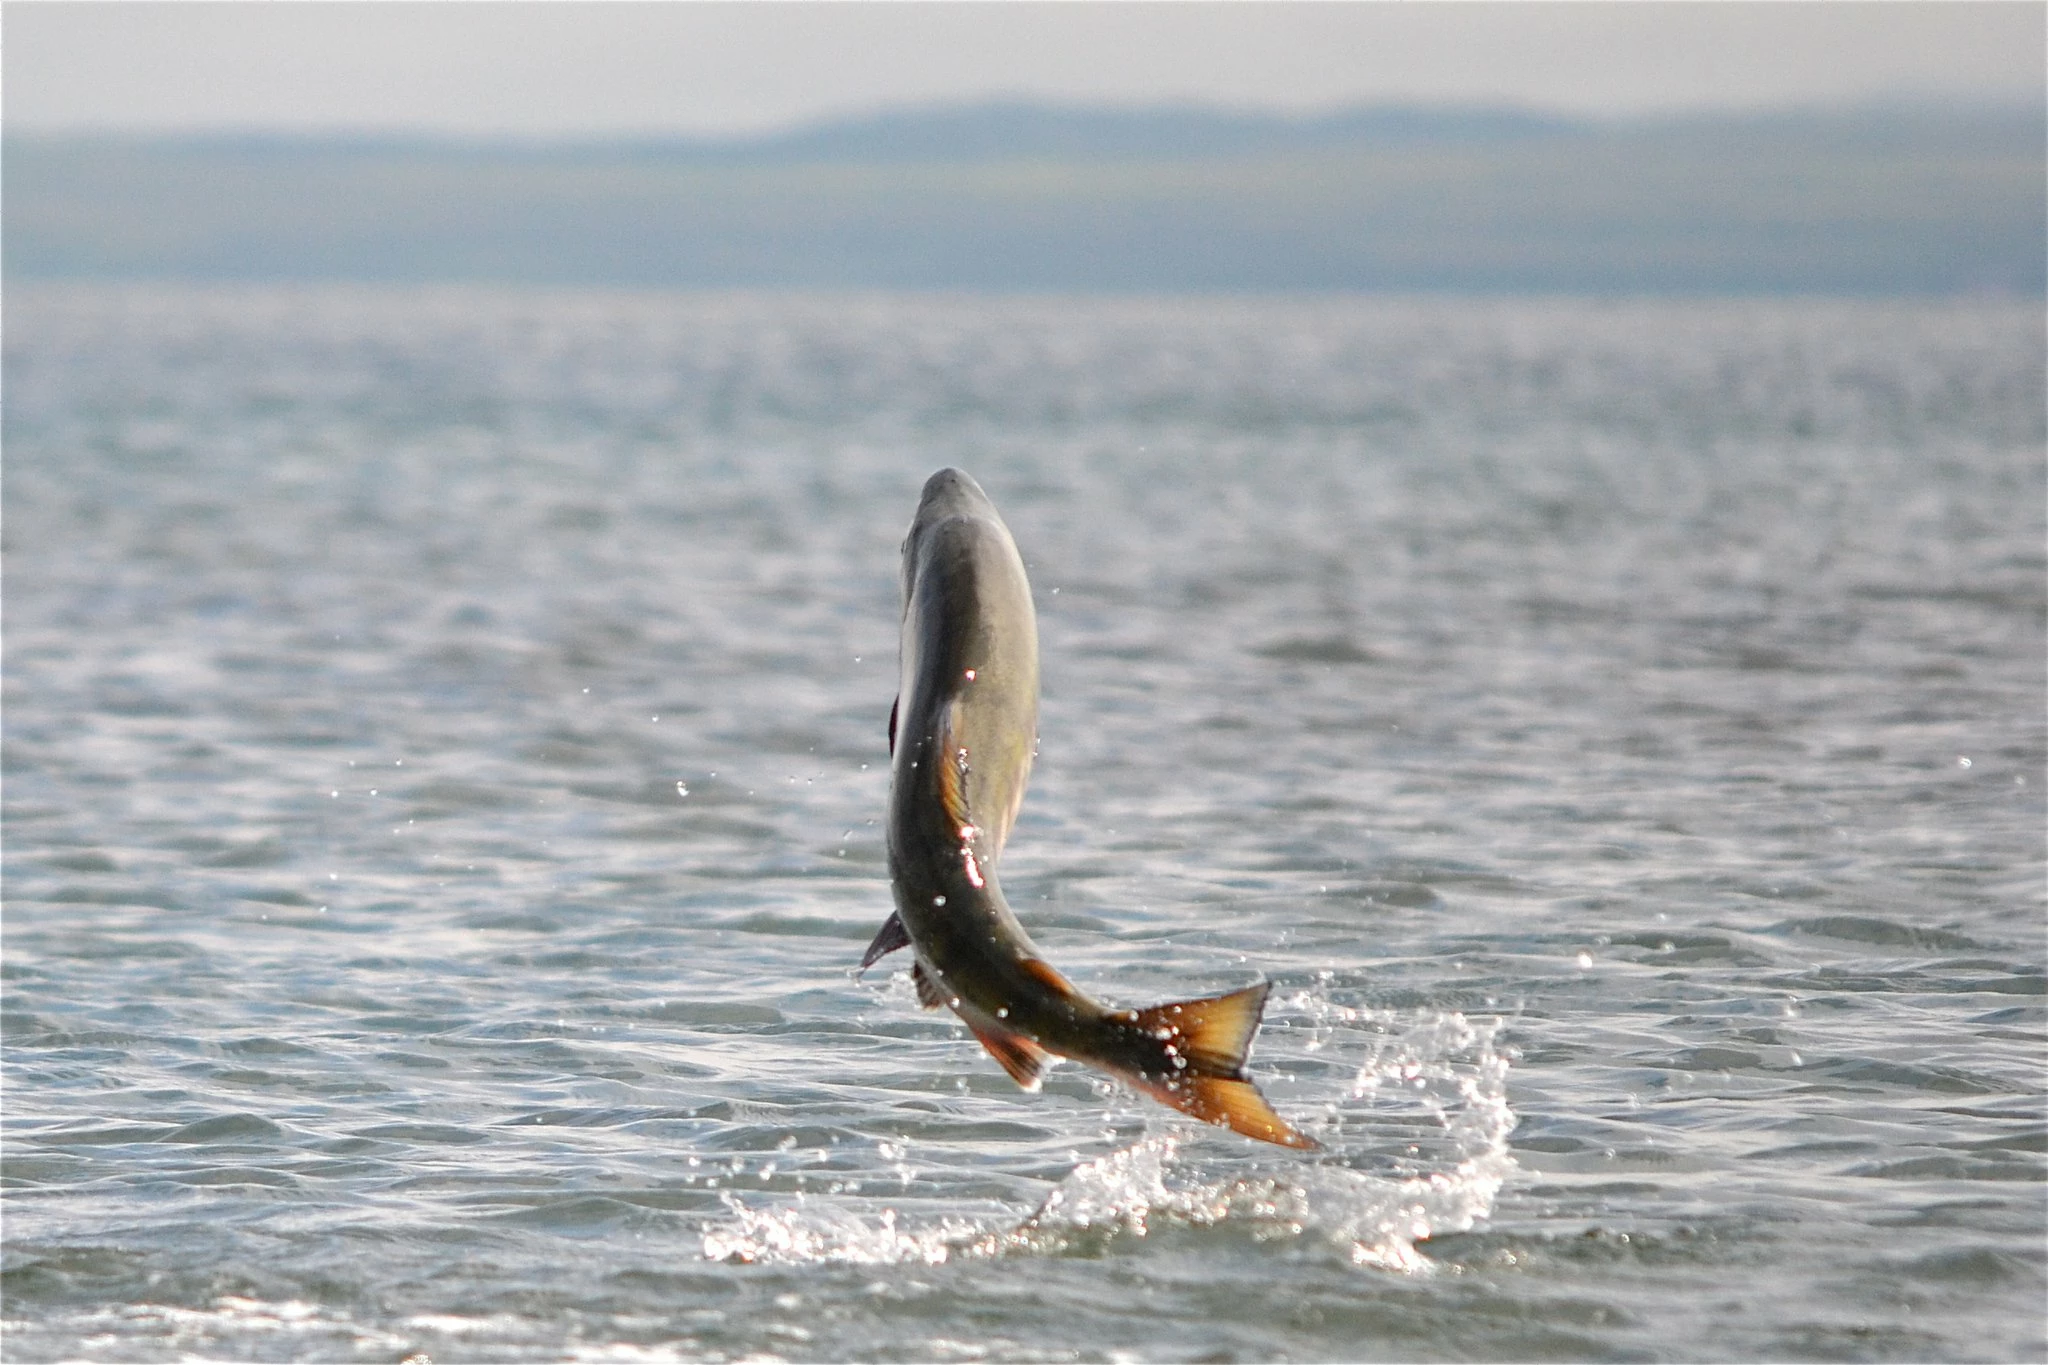 chum salmon leaping